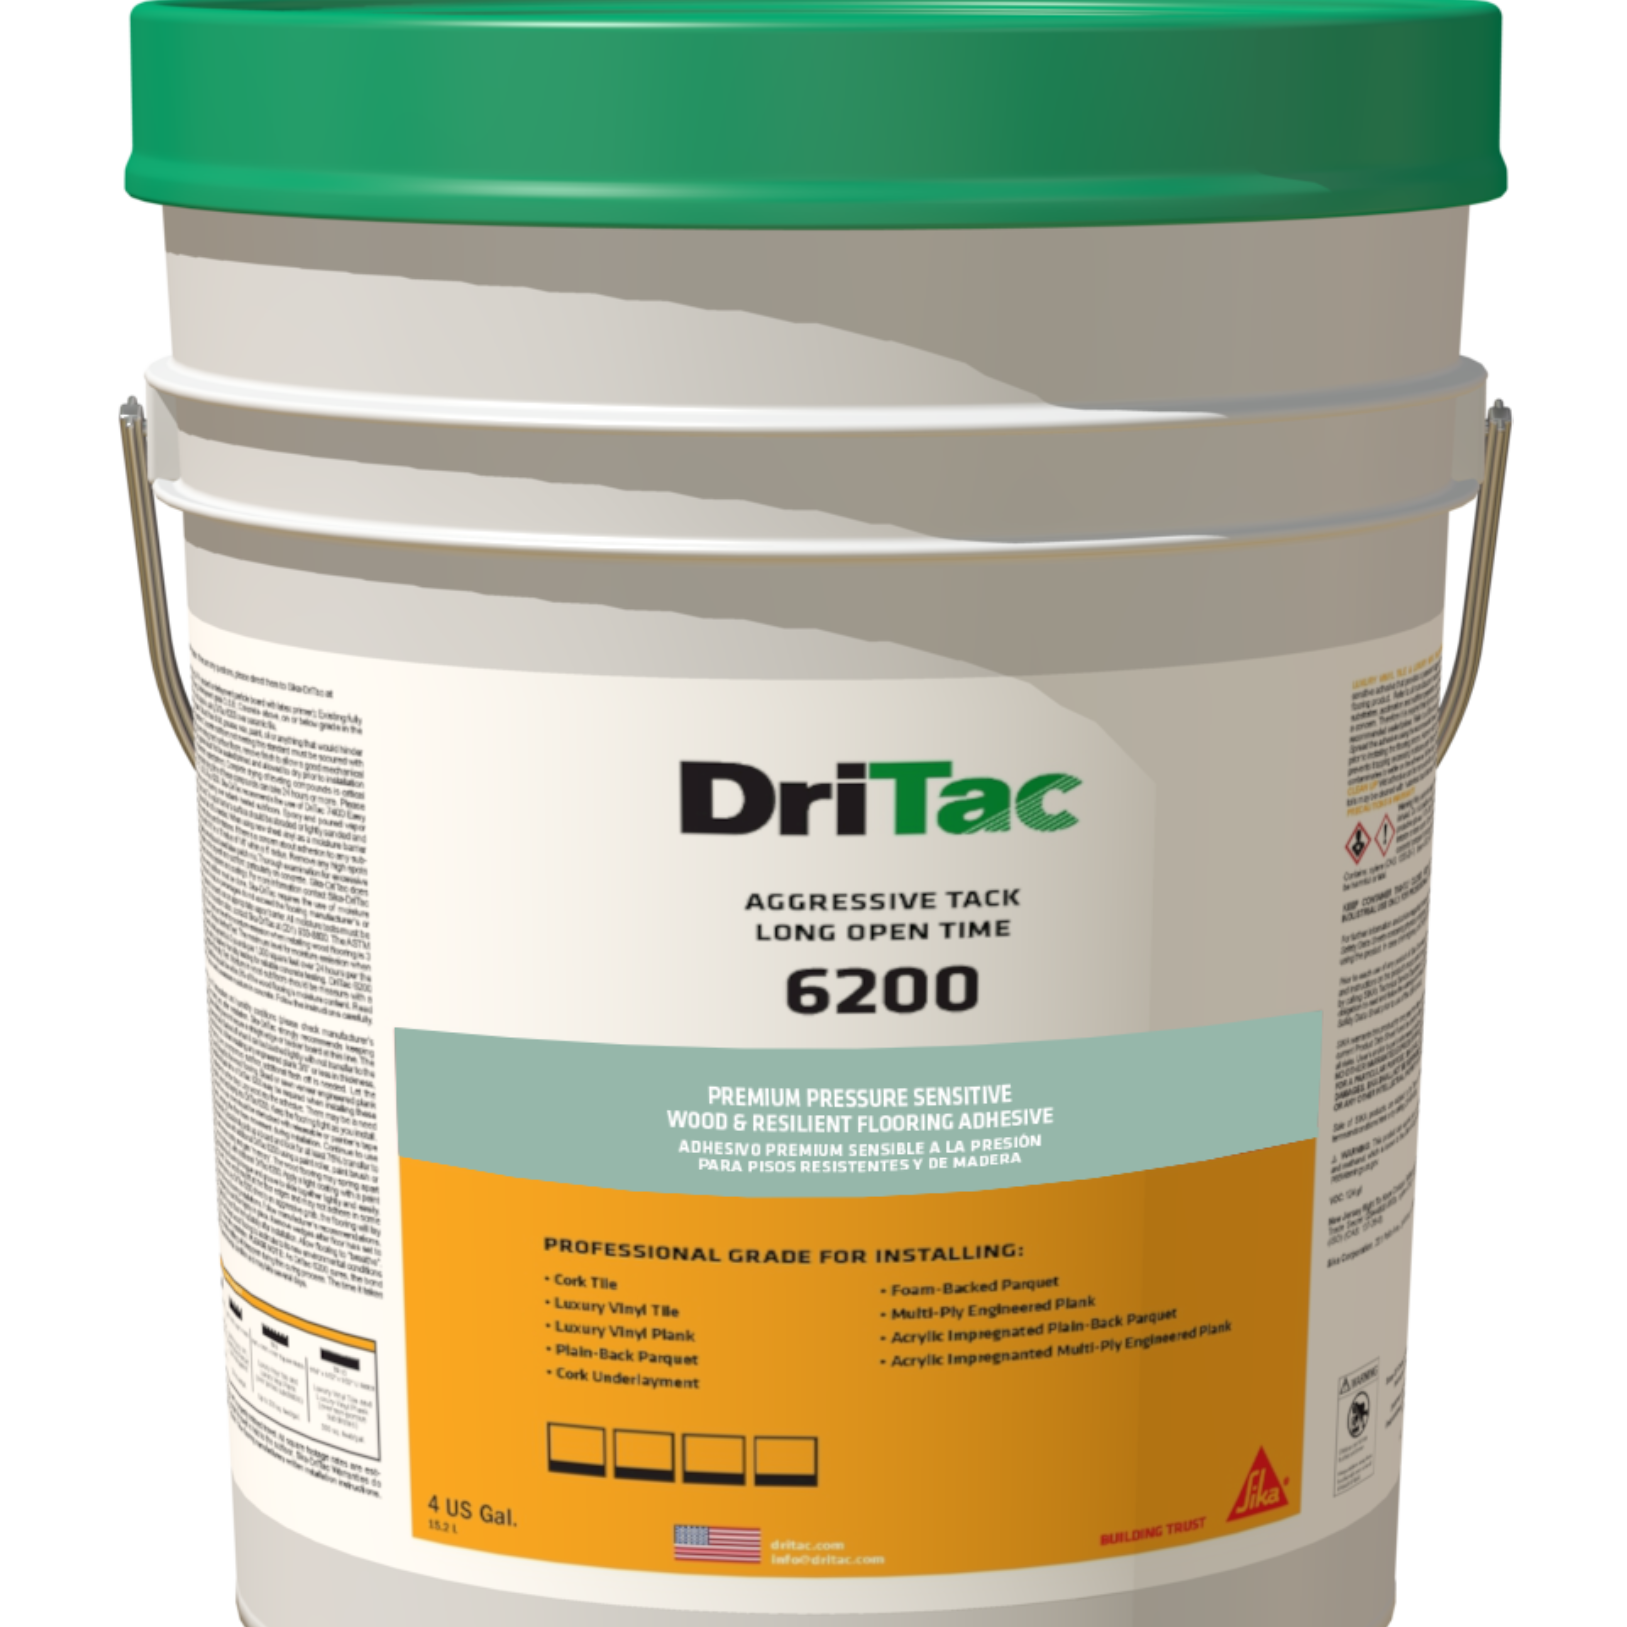 Dritac 6200 Aggressive Tack Long Open Time Flooring Adhesive